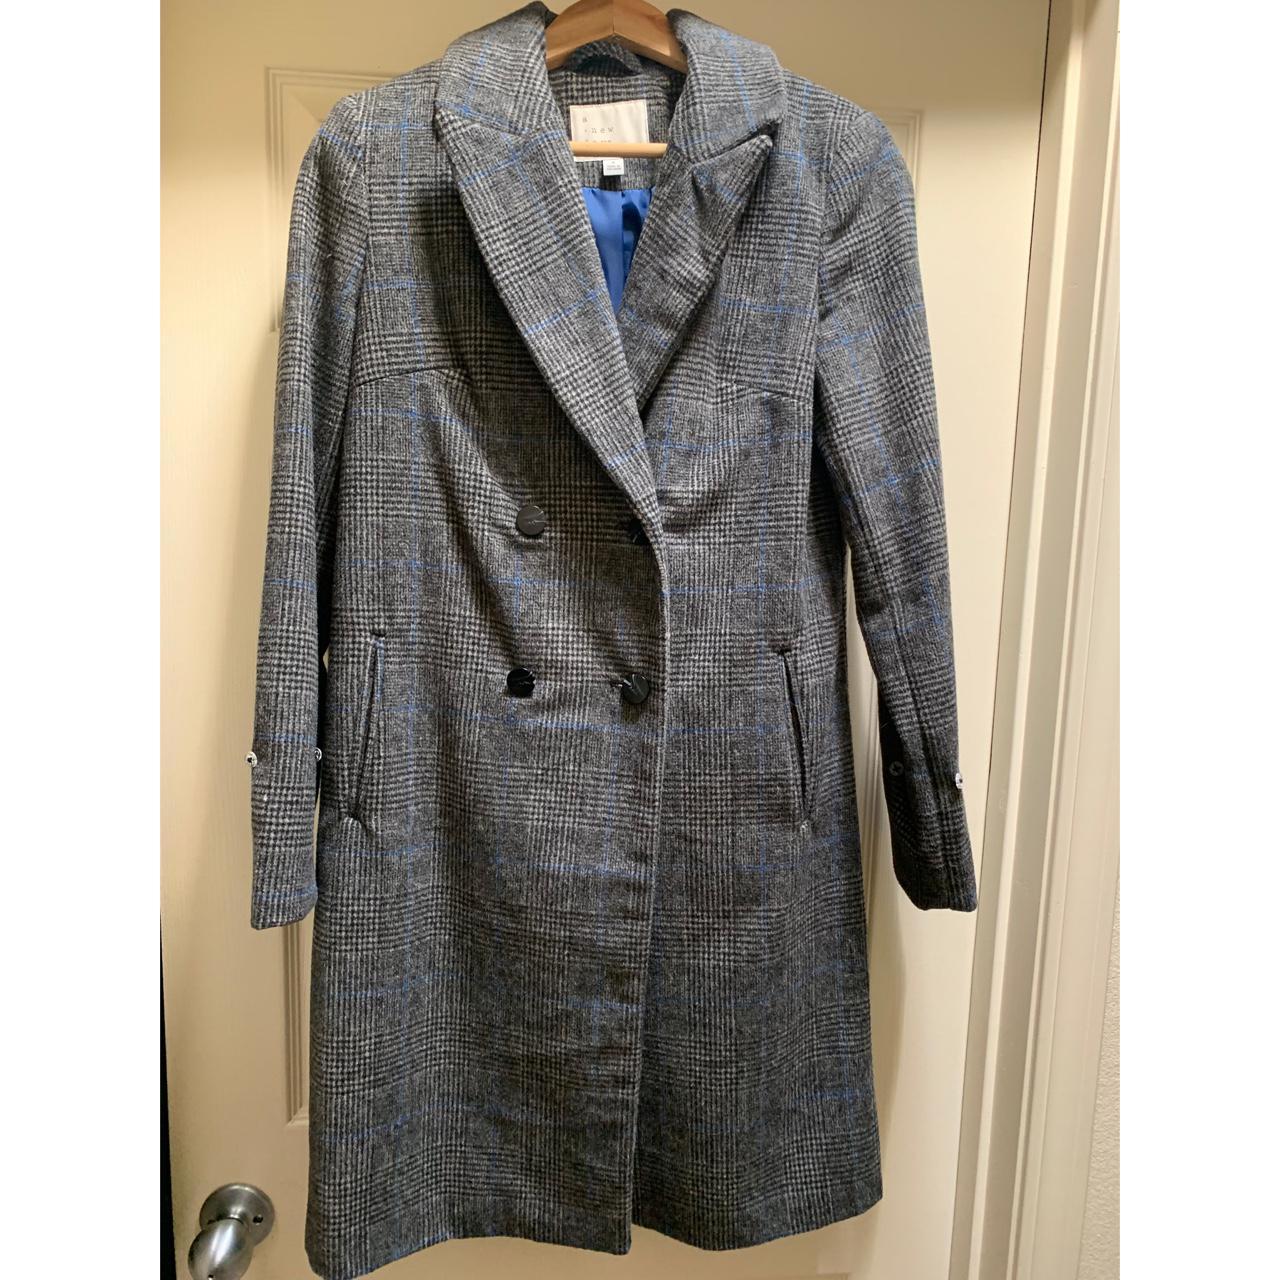 Target Women's Blue and Grey Coat (2)